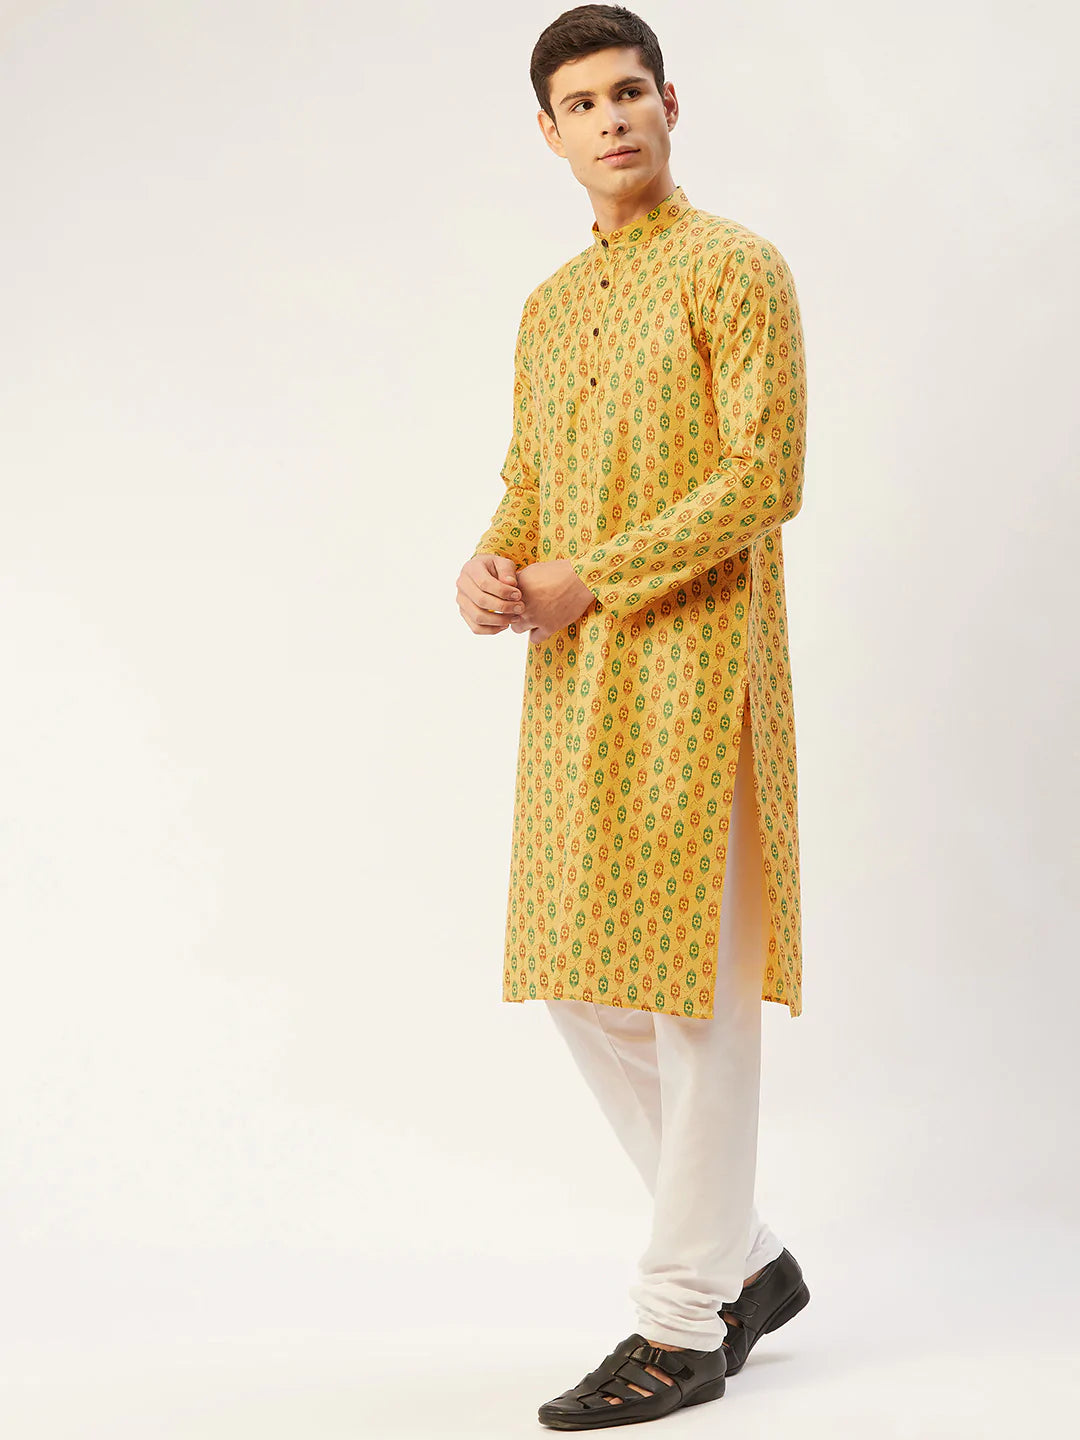 Jompers Men's Mustard Cotton Ikat printed kurta Pyjama Set ( JOKP 651 Mustard )